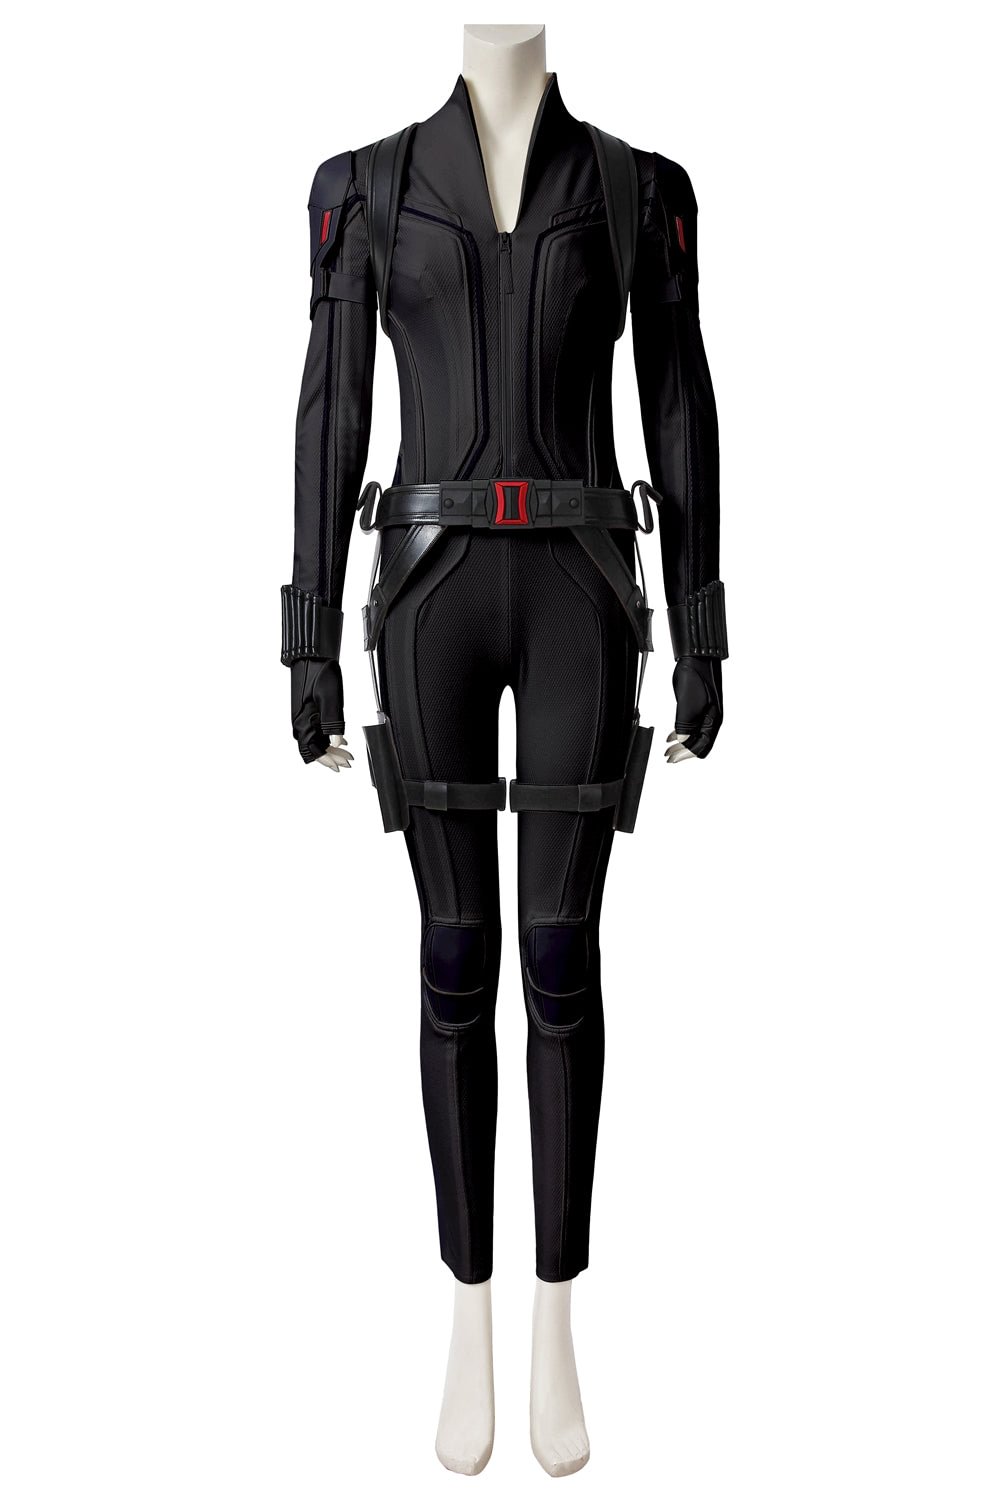 Black Widow Cosplay Costume Natasha Black Suit Top Level